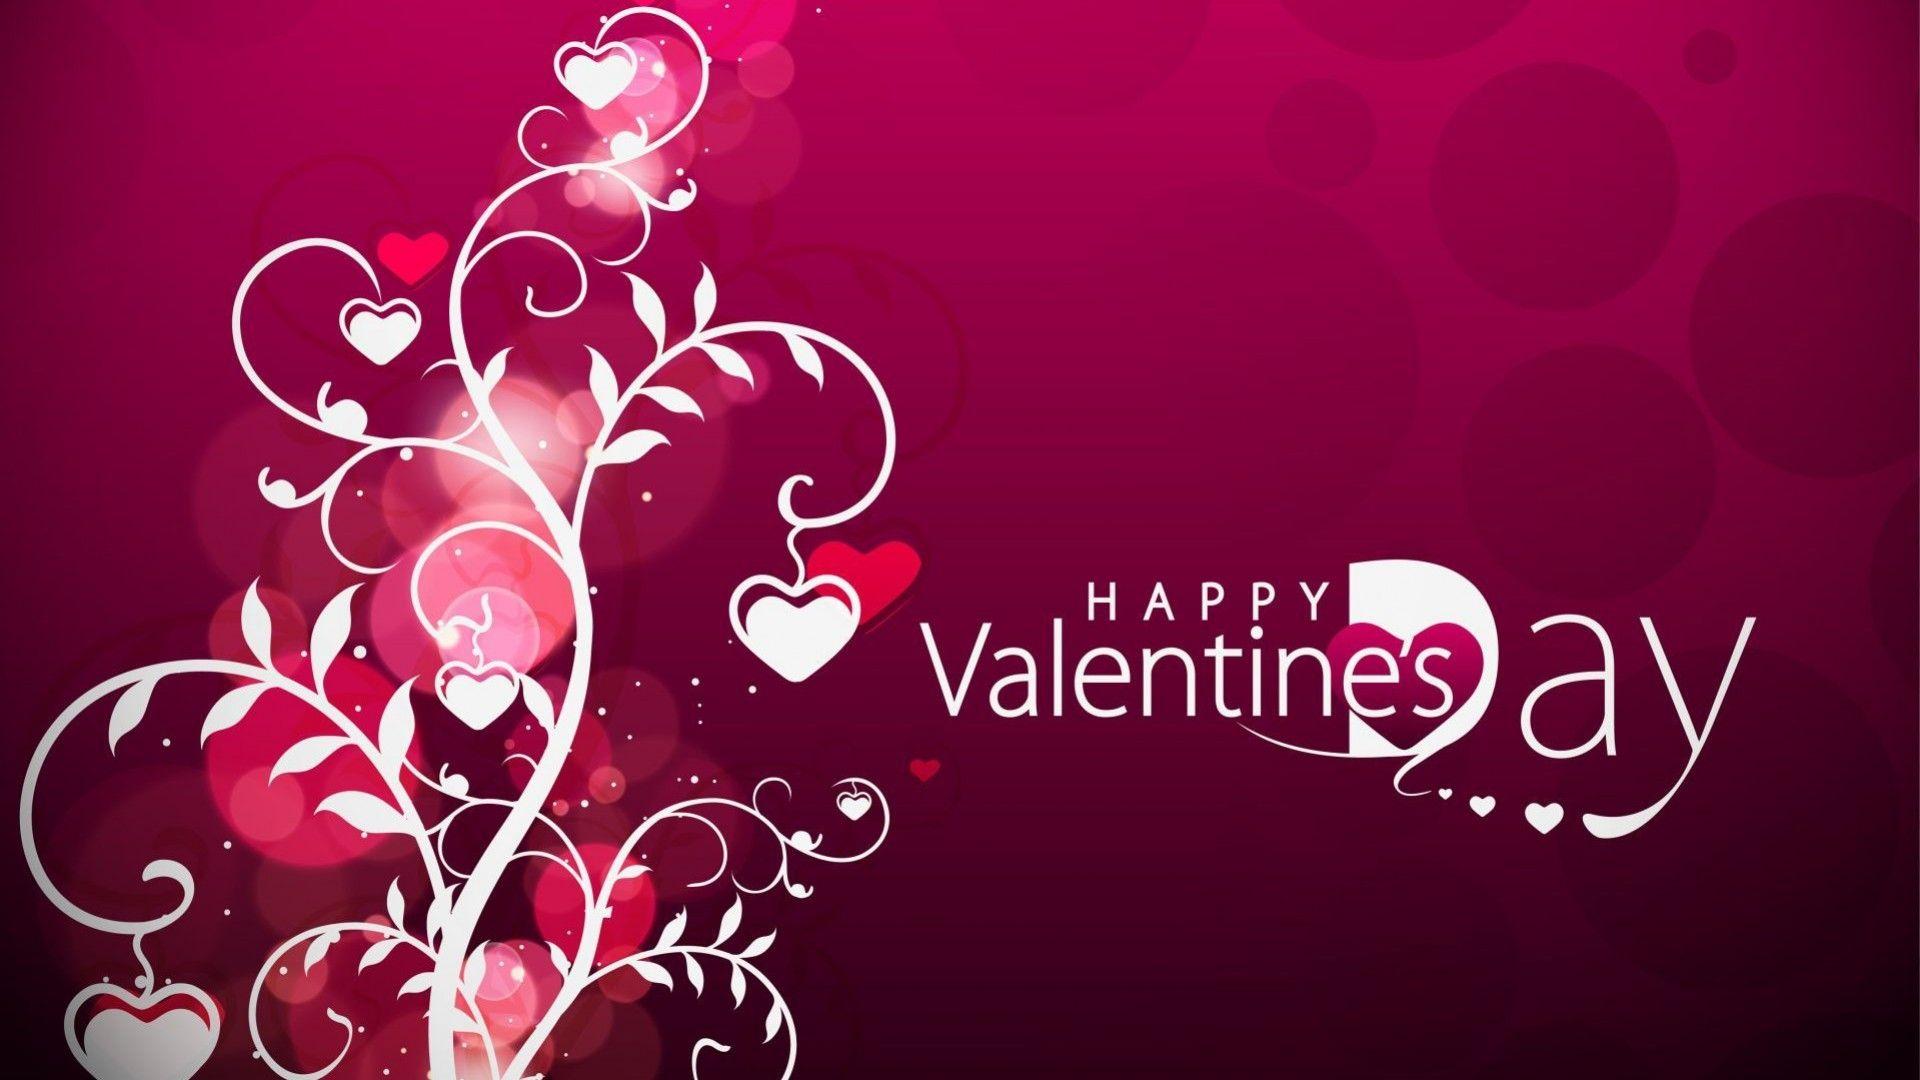 Valentines Day 2014 HD Wallpaper 1920x1080 For Desktop Background